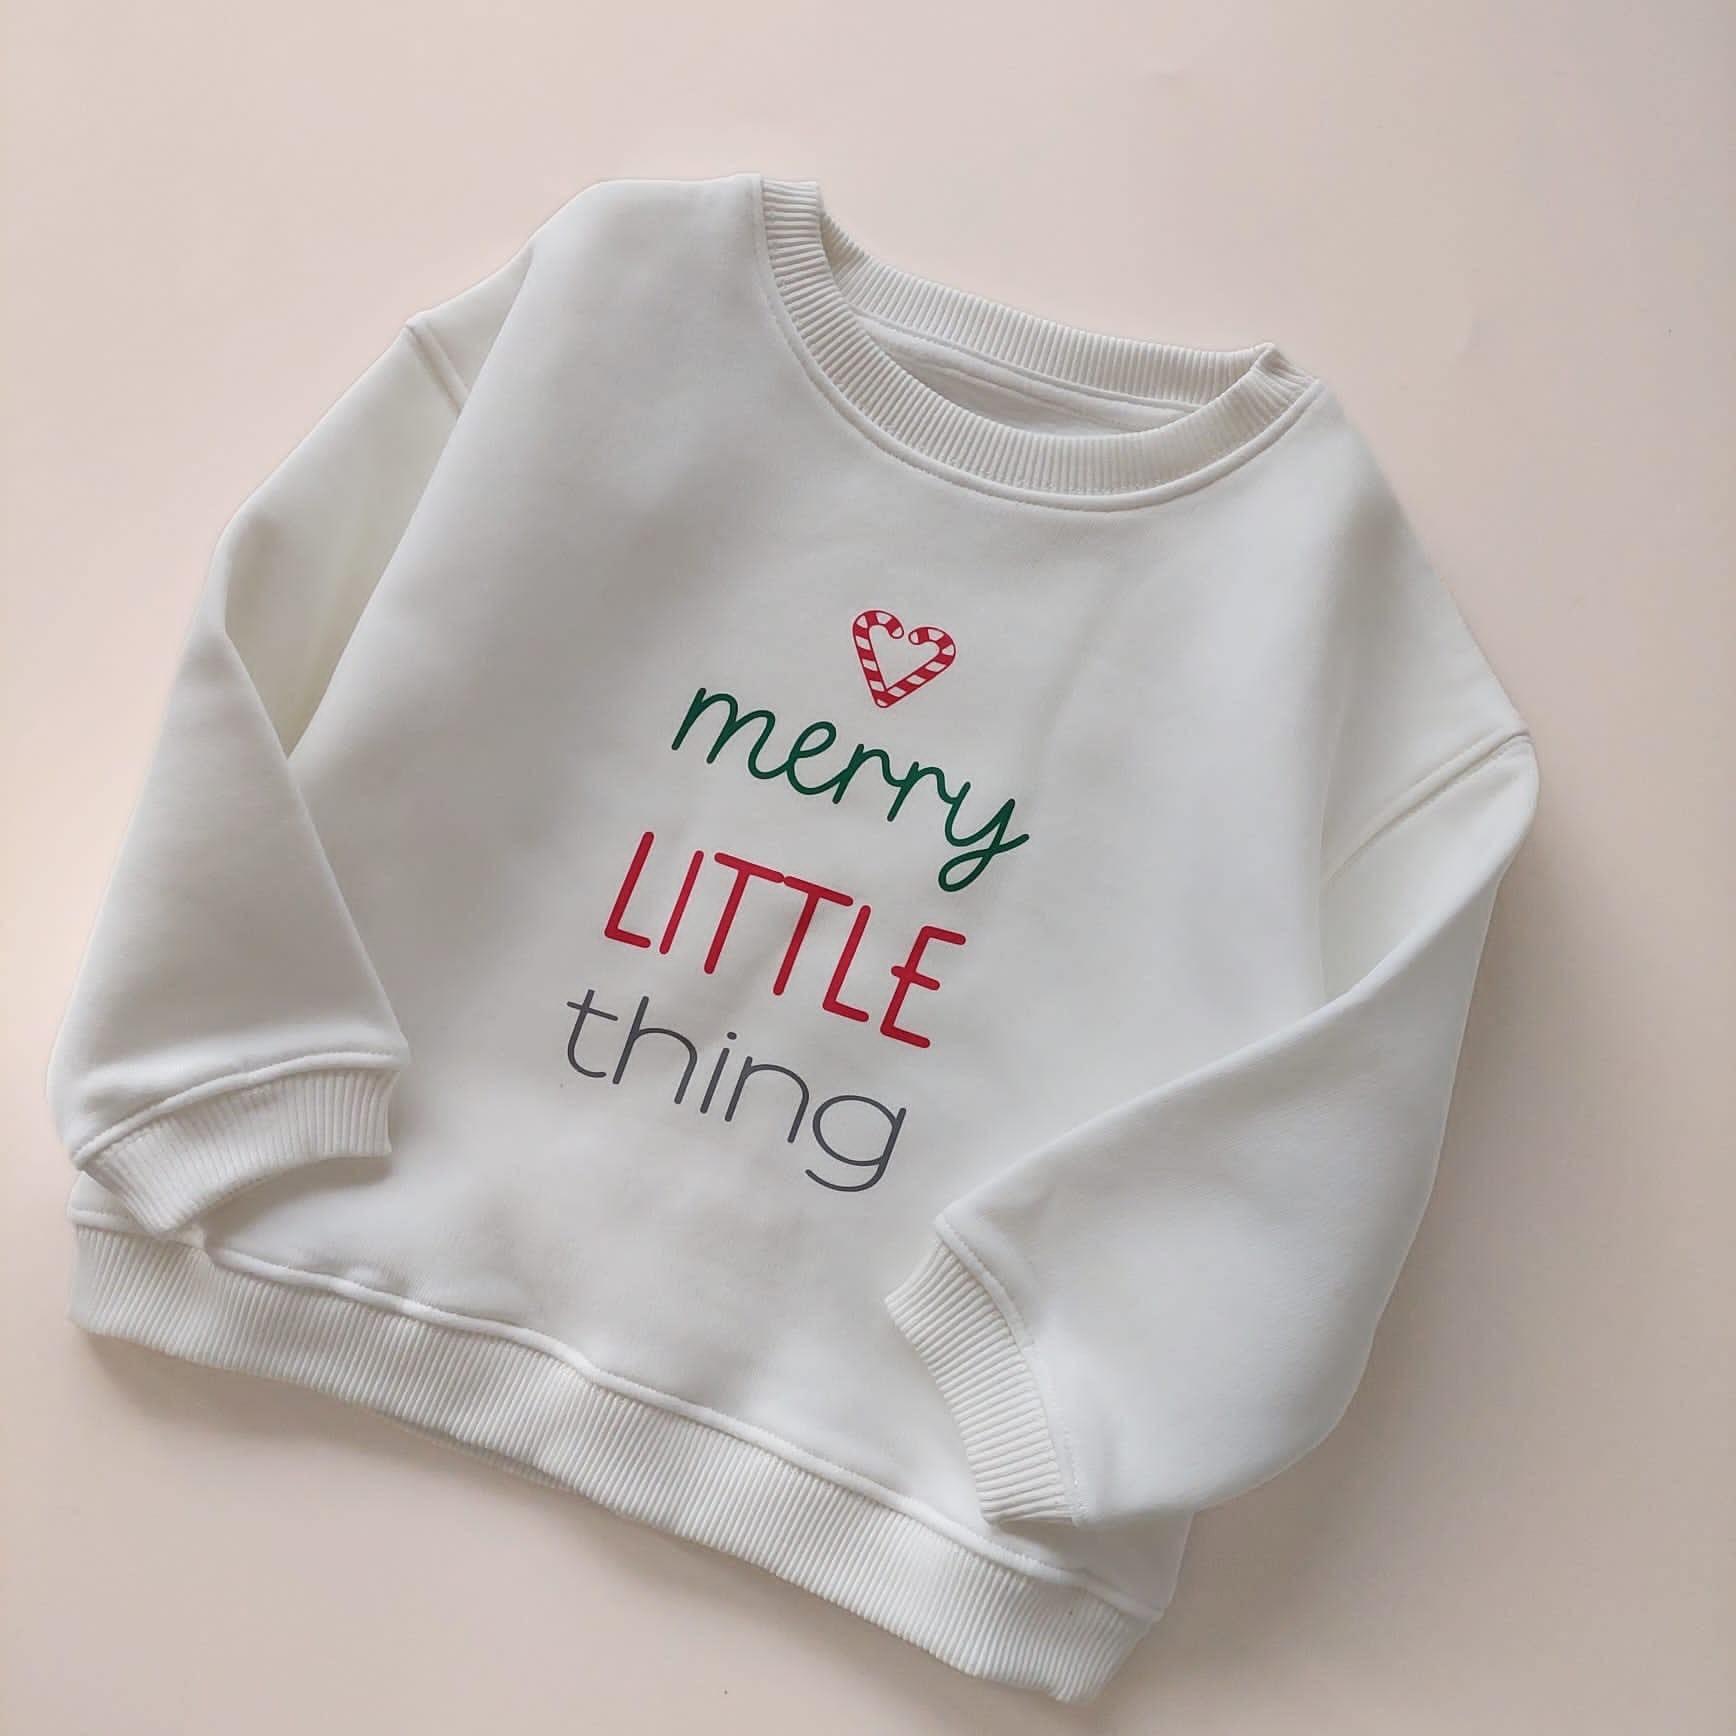 Merry Little Thing sweatshirt